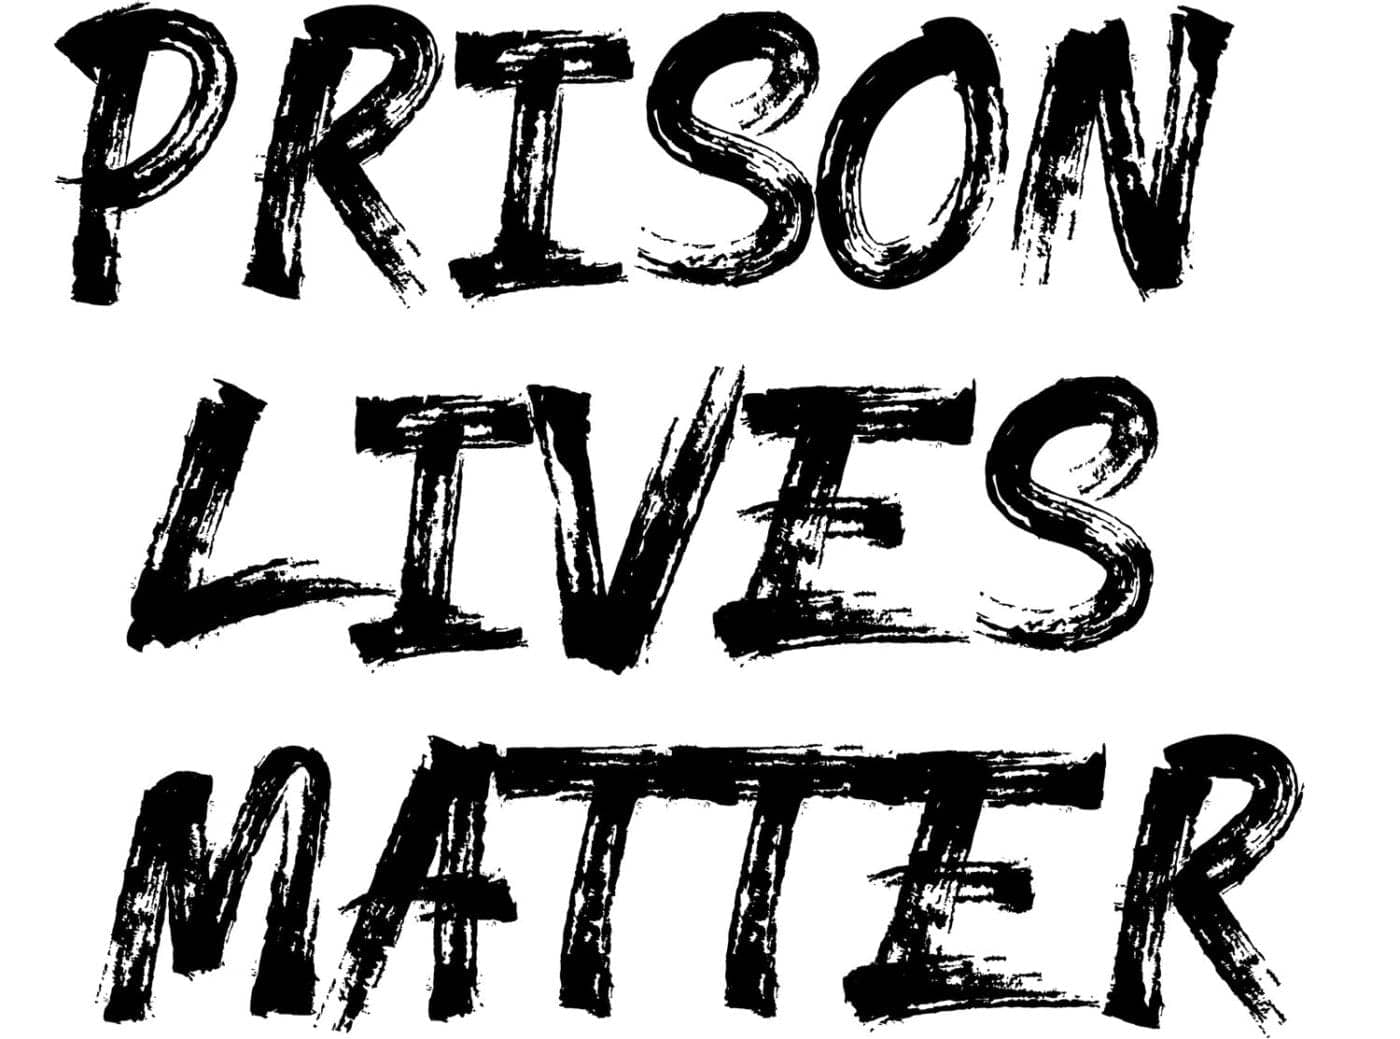 Prison-Lives-Matter-logo-1400x1039, Repression breeds resistance and rebellion, Abolition Now! 